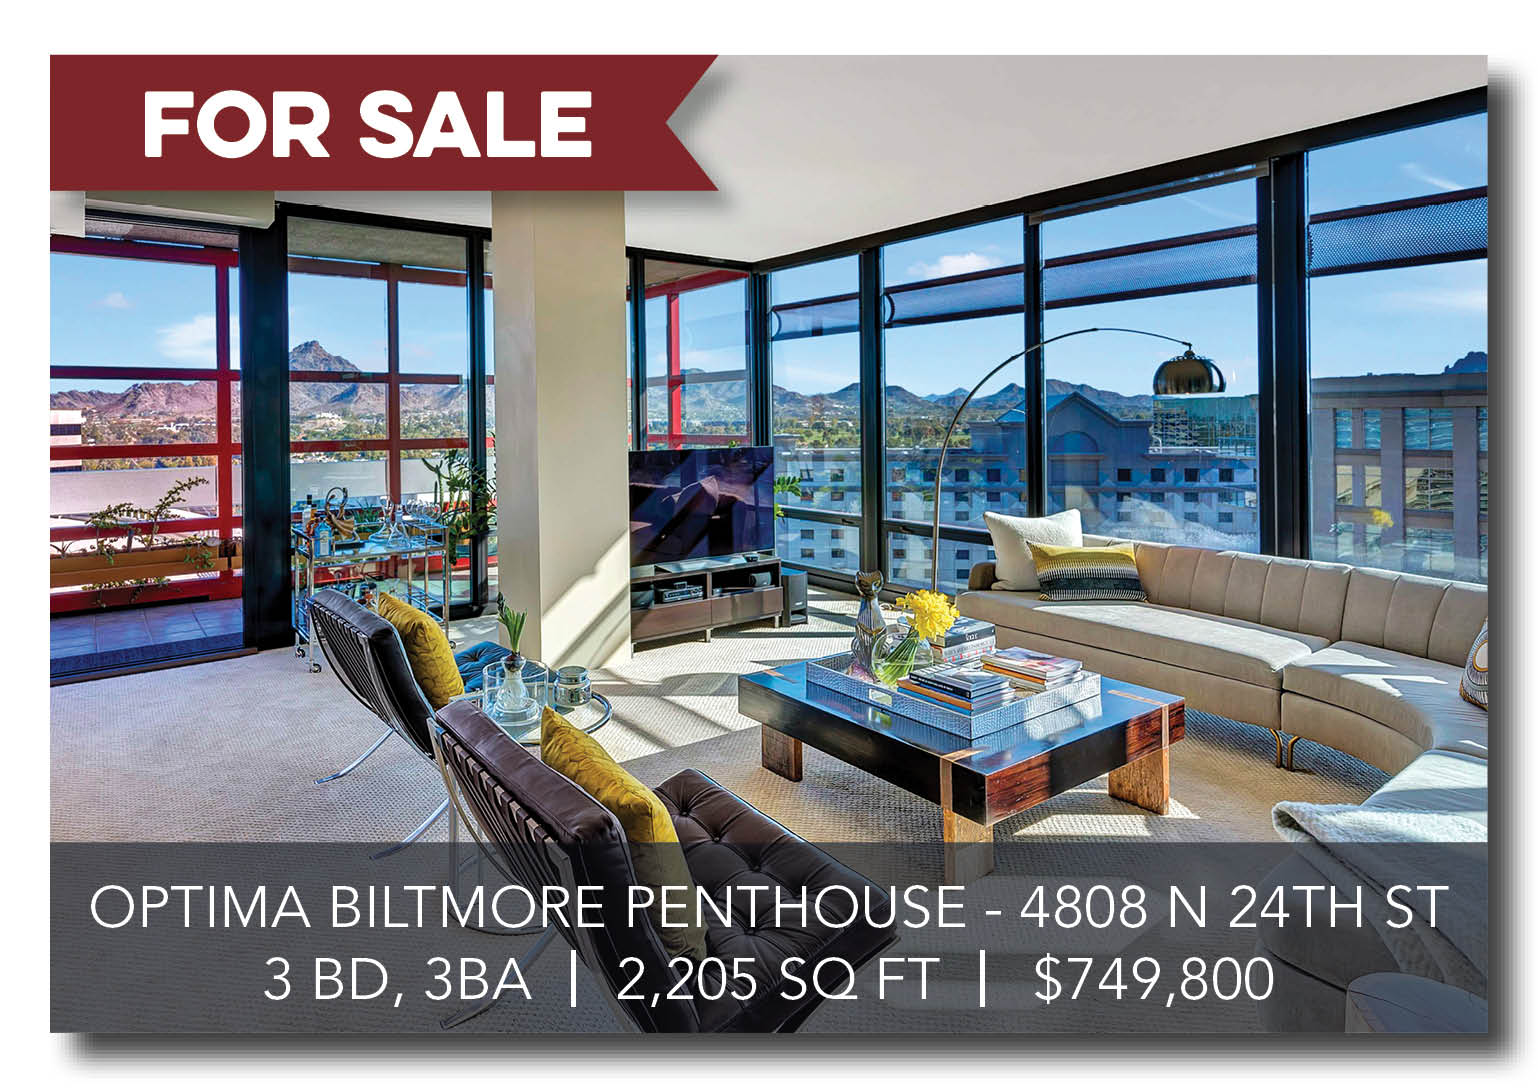 For Sale Optima Biltmore Penthouse